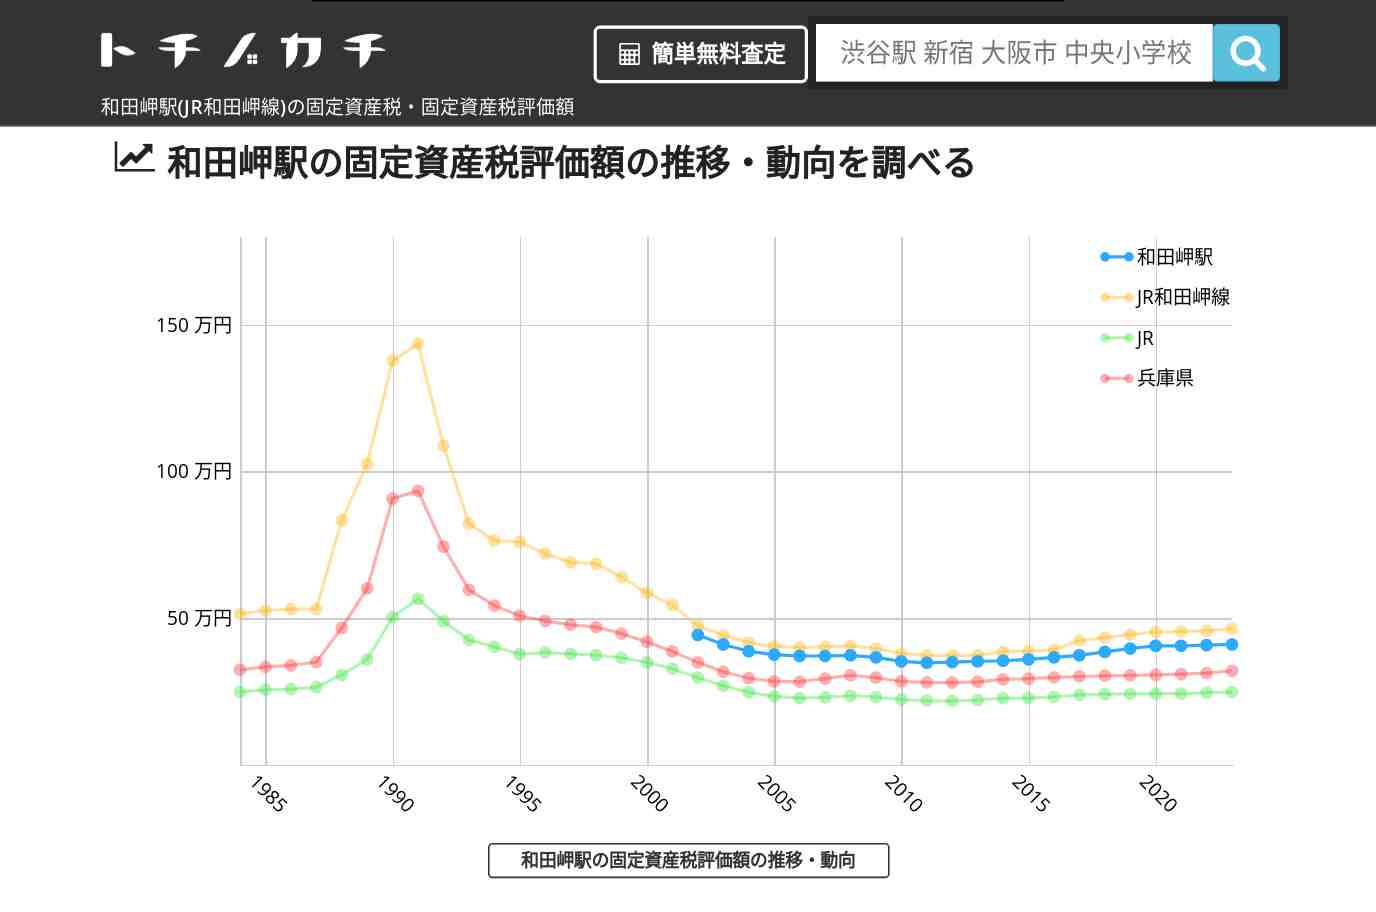 和田岬駅(JR和田岬線)の固定資産税・固定資産税評価額 | トチノカチ